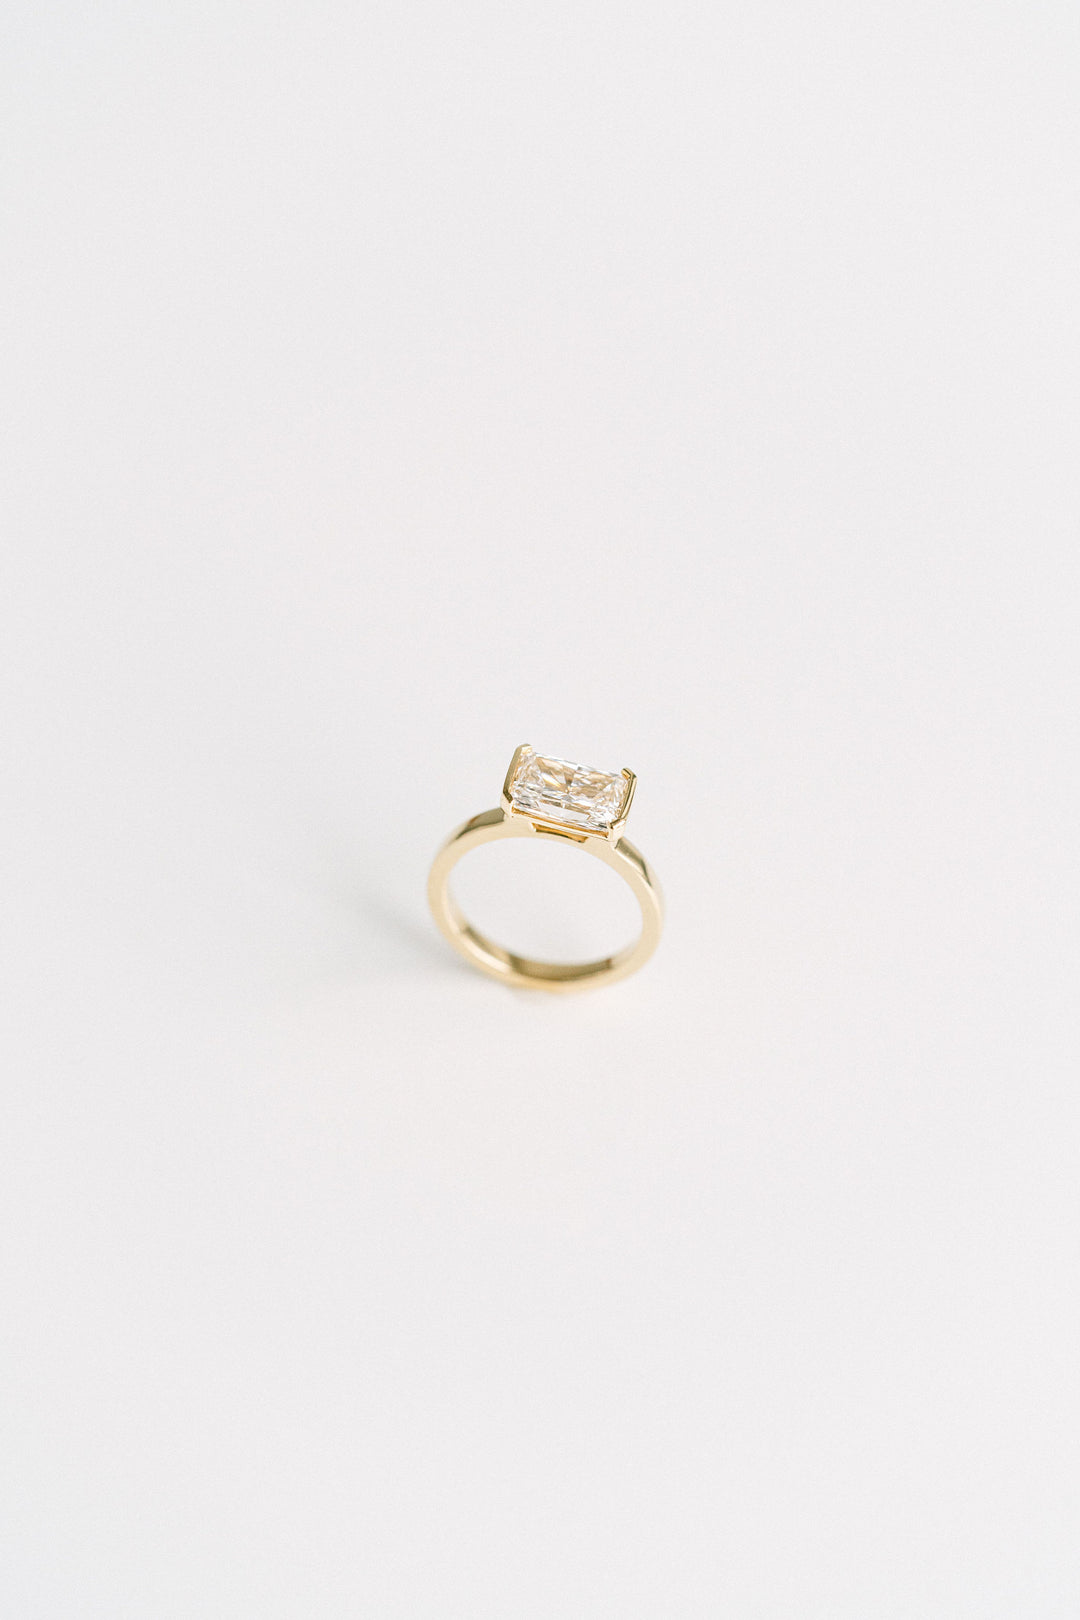 Radiant Cut East-West Half Bezel Diamond Engagement Ring, 14k Yellow Gold